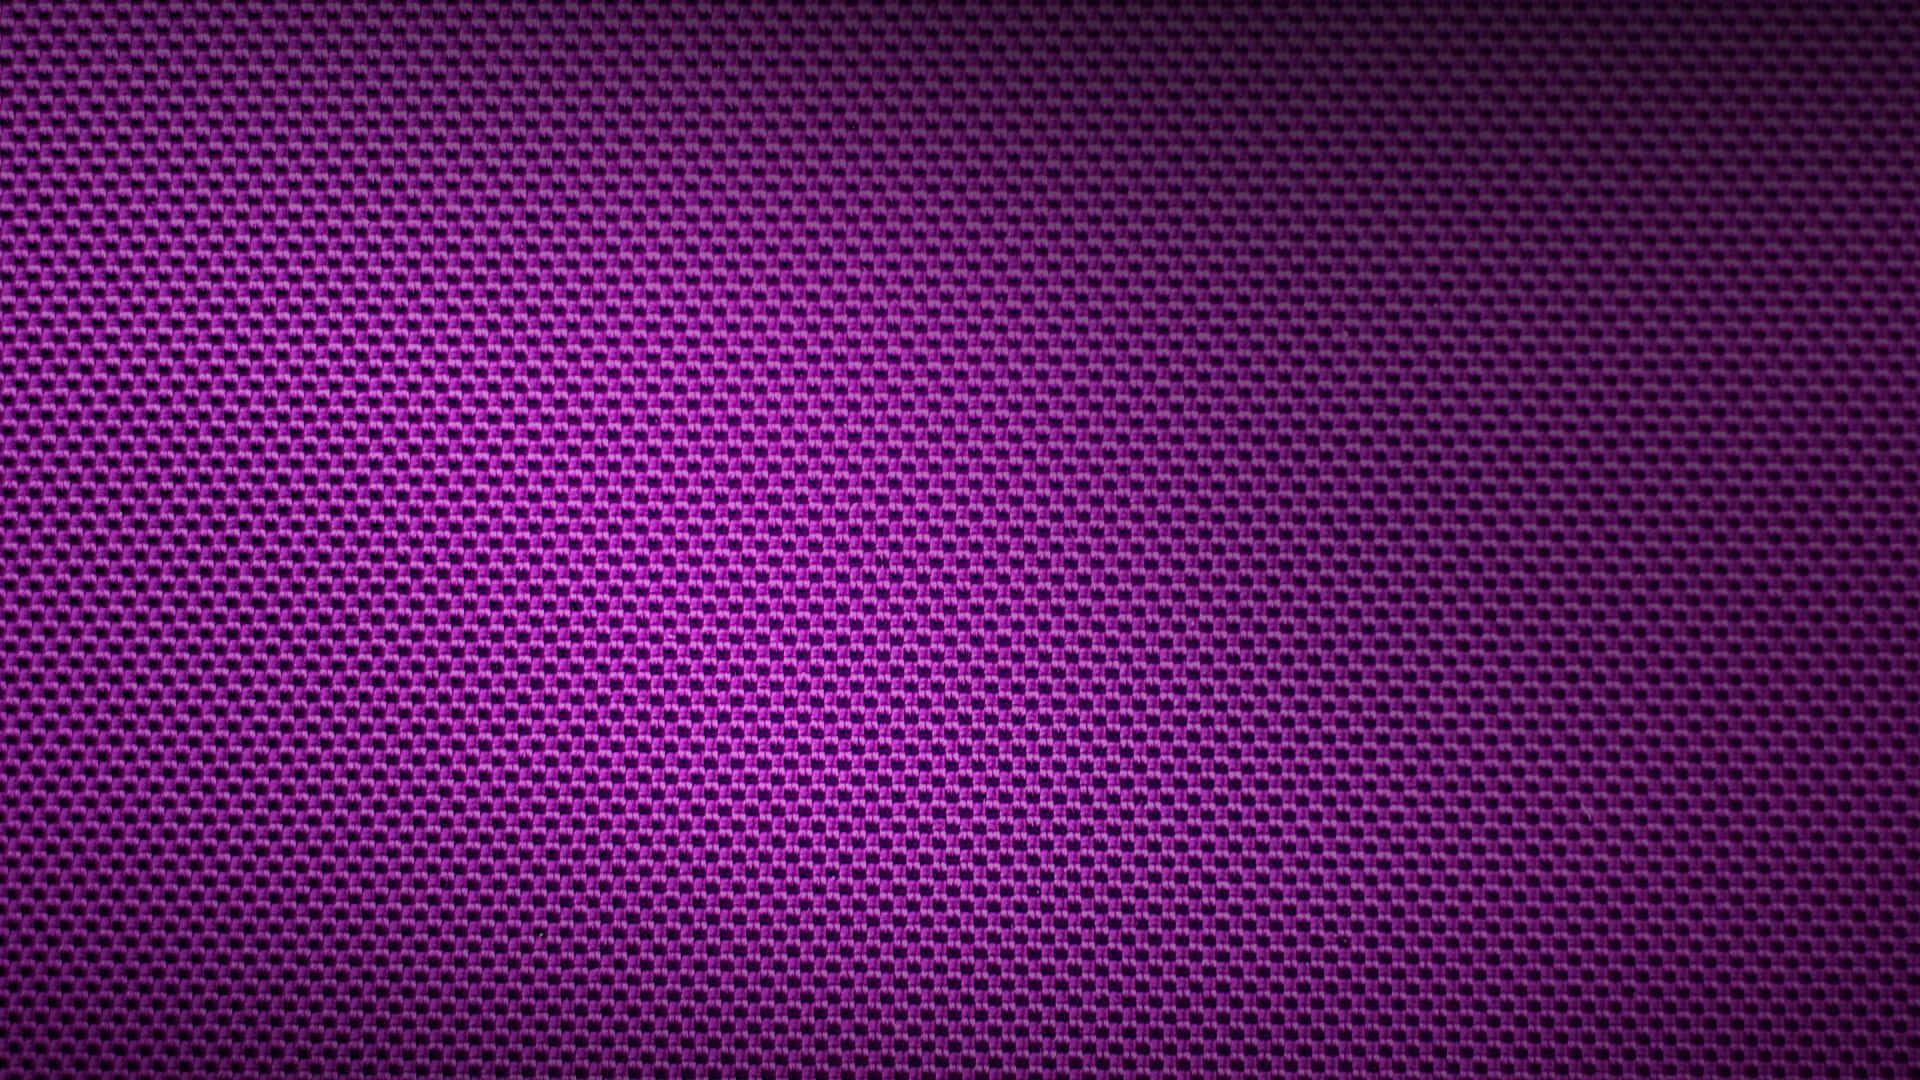 Purple-Textured Background to Make a Stylish Statement